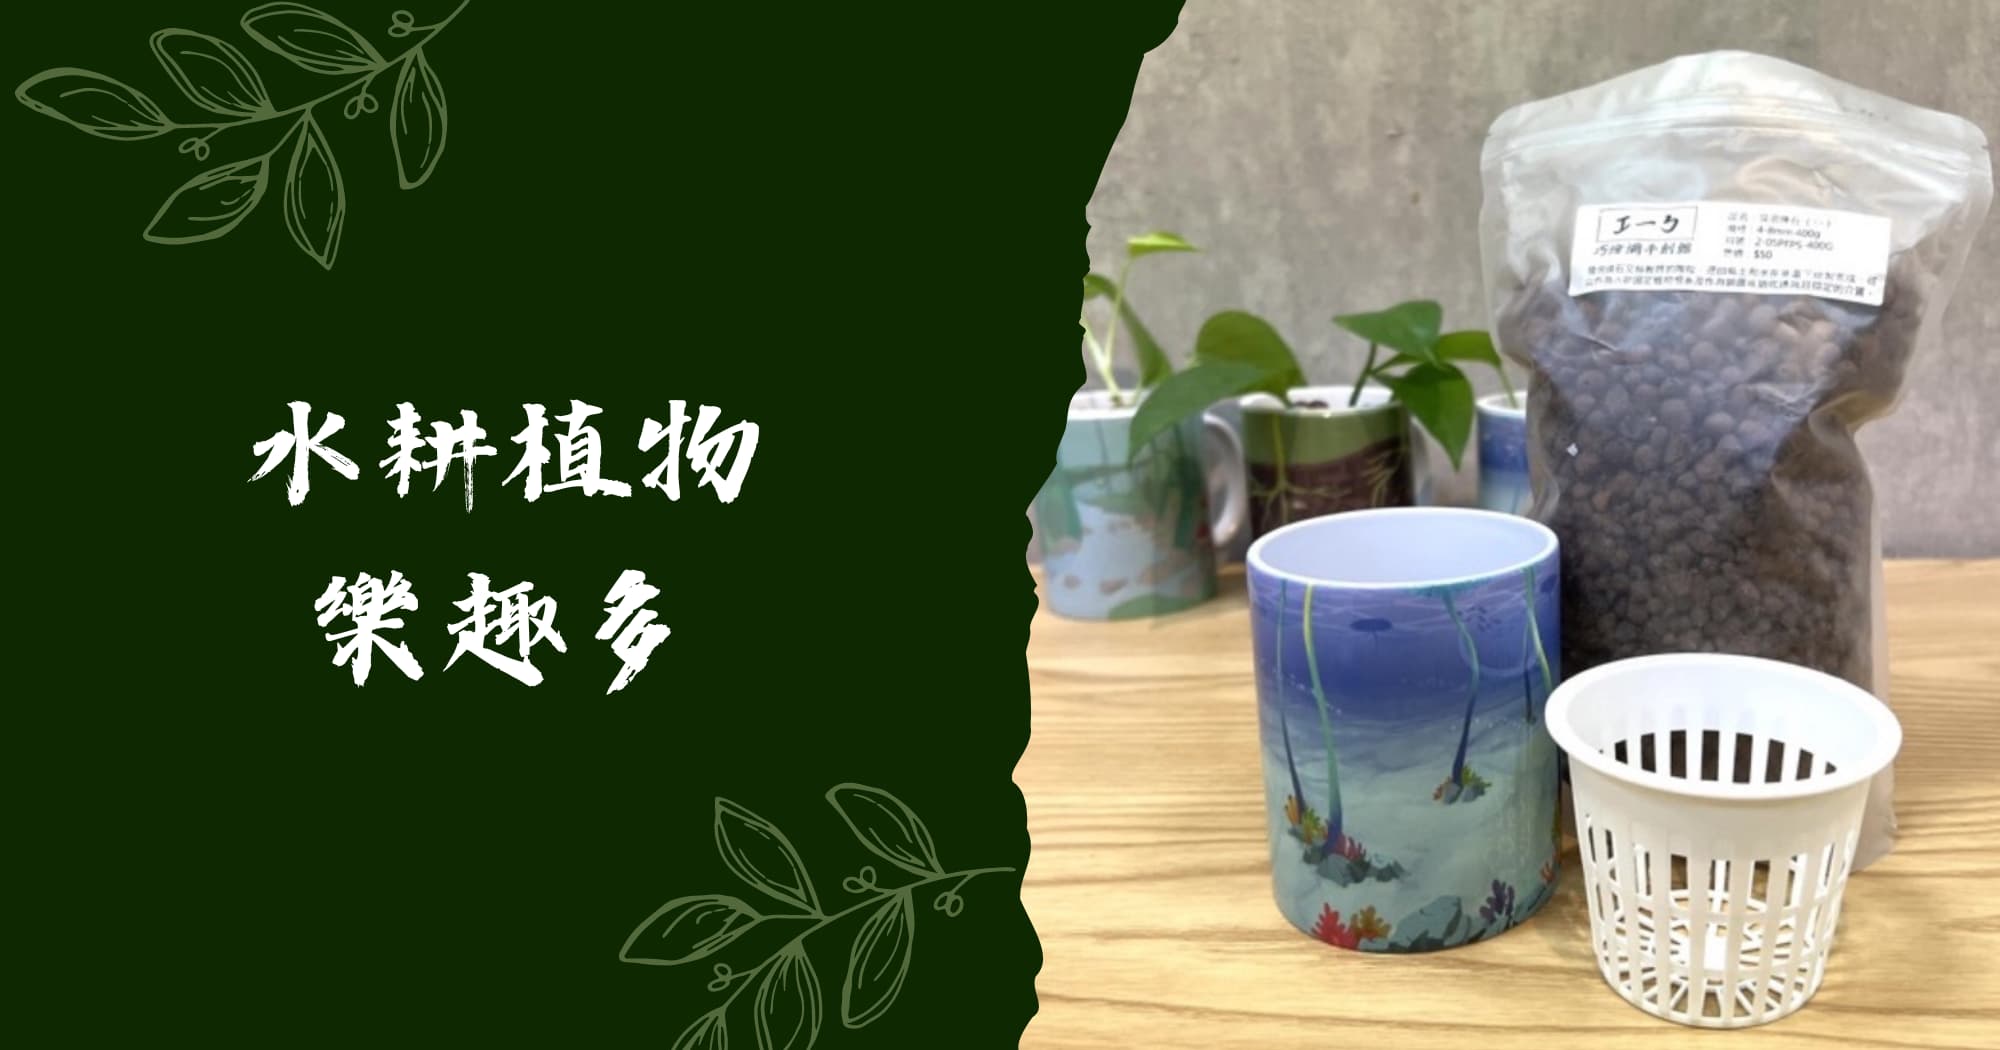 hydroponic plant mug banner